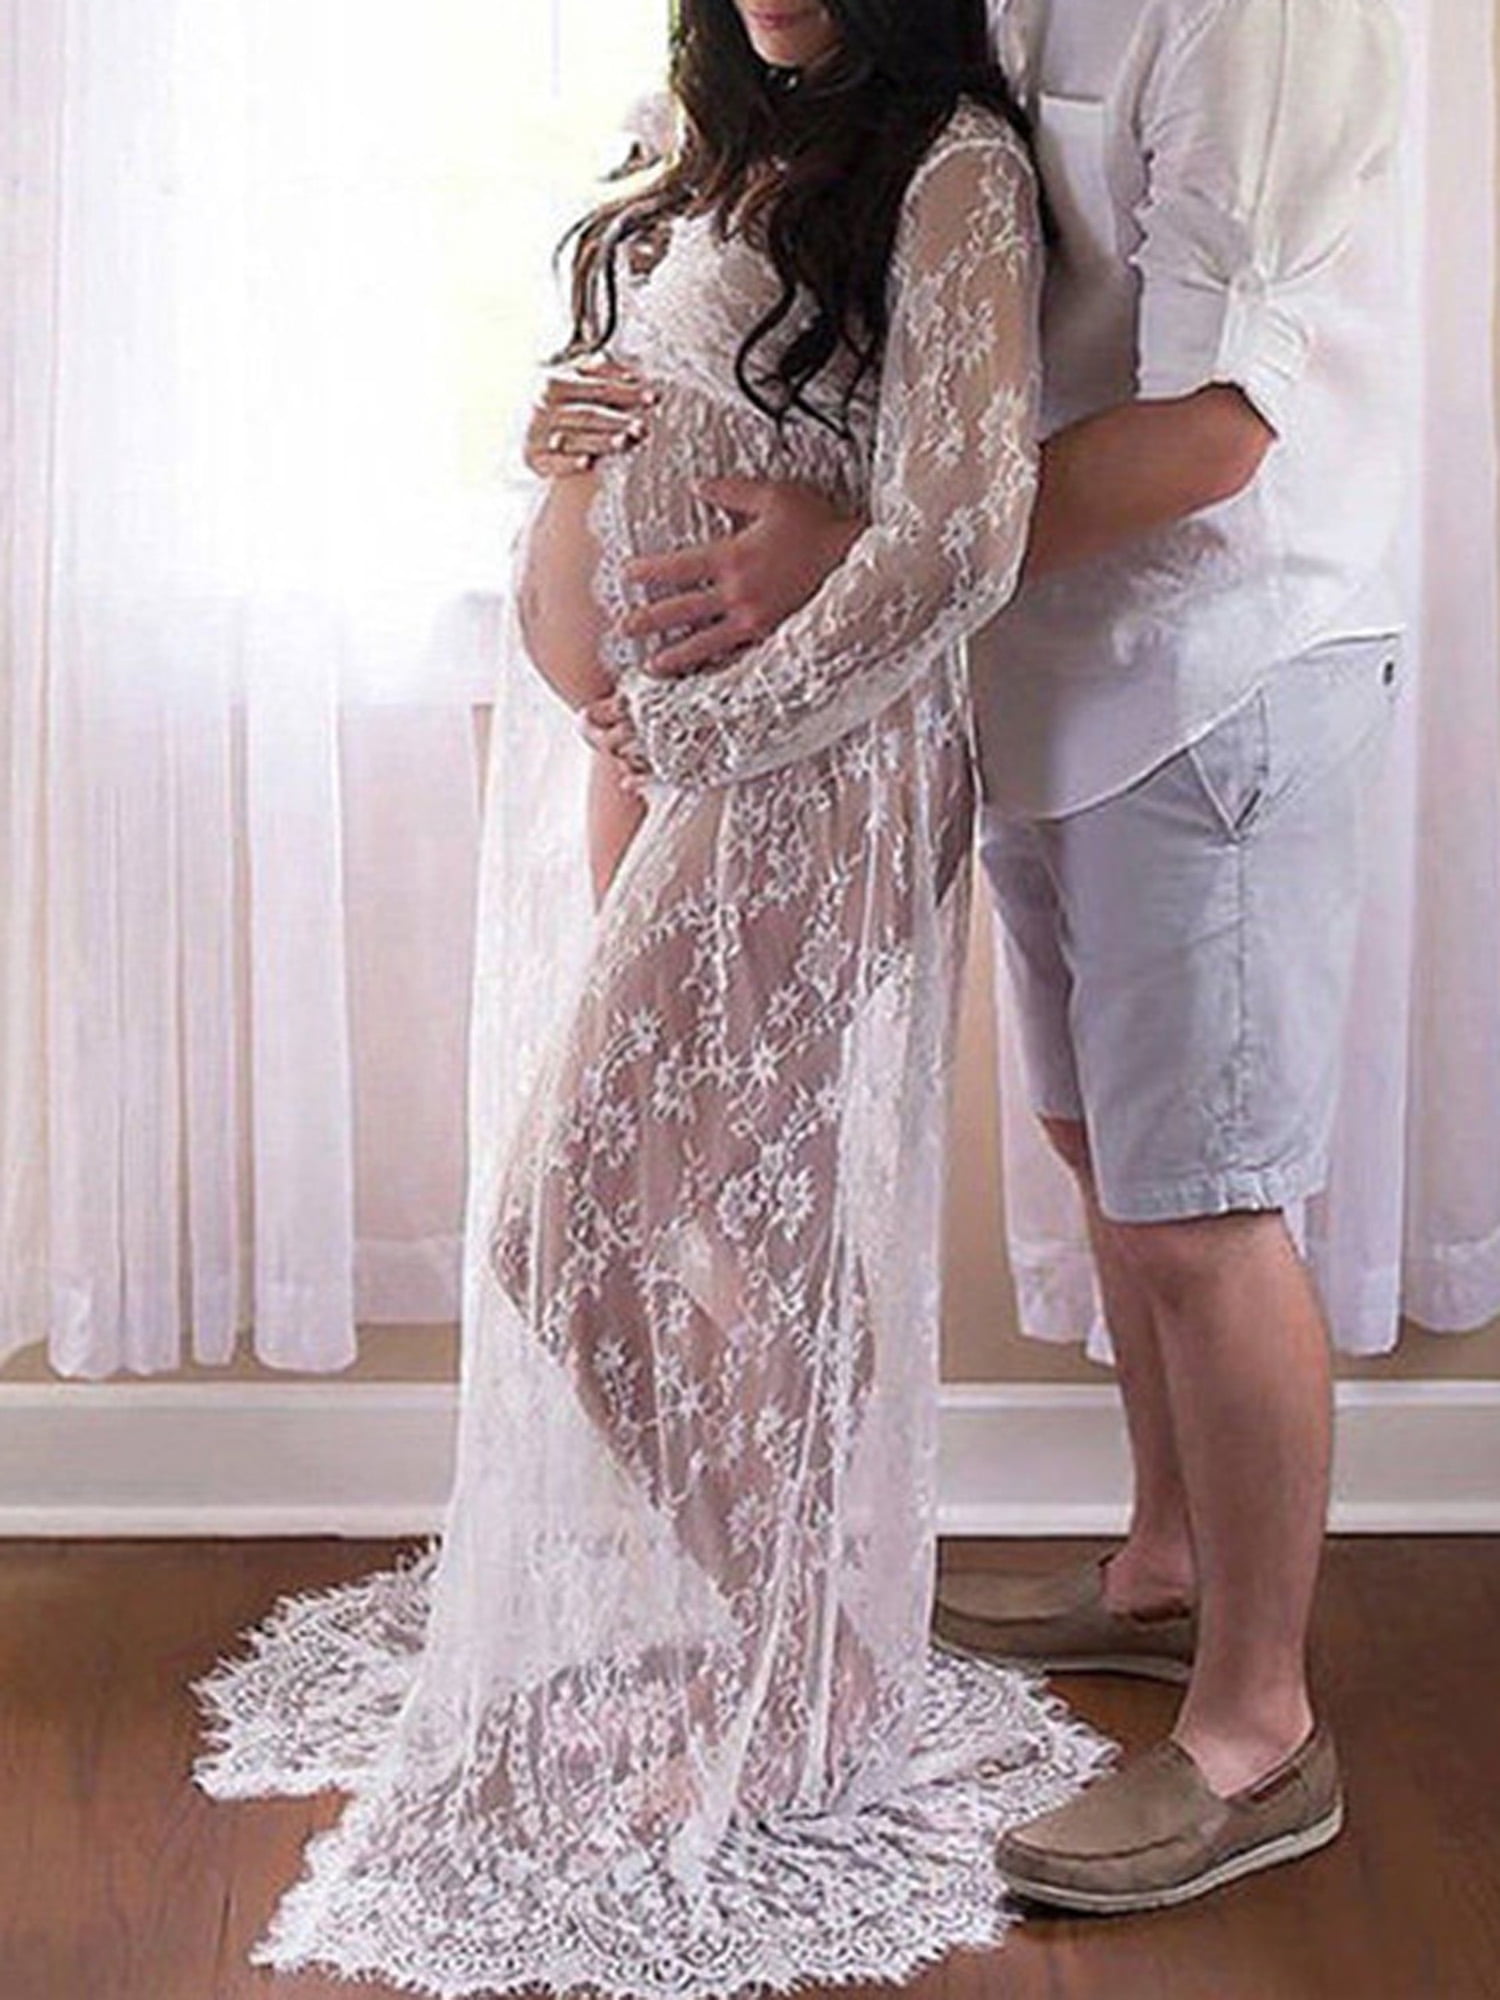 Update 251+ maternity shoot dresses latest